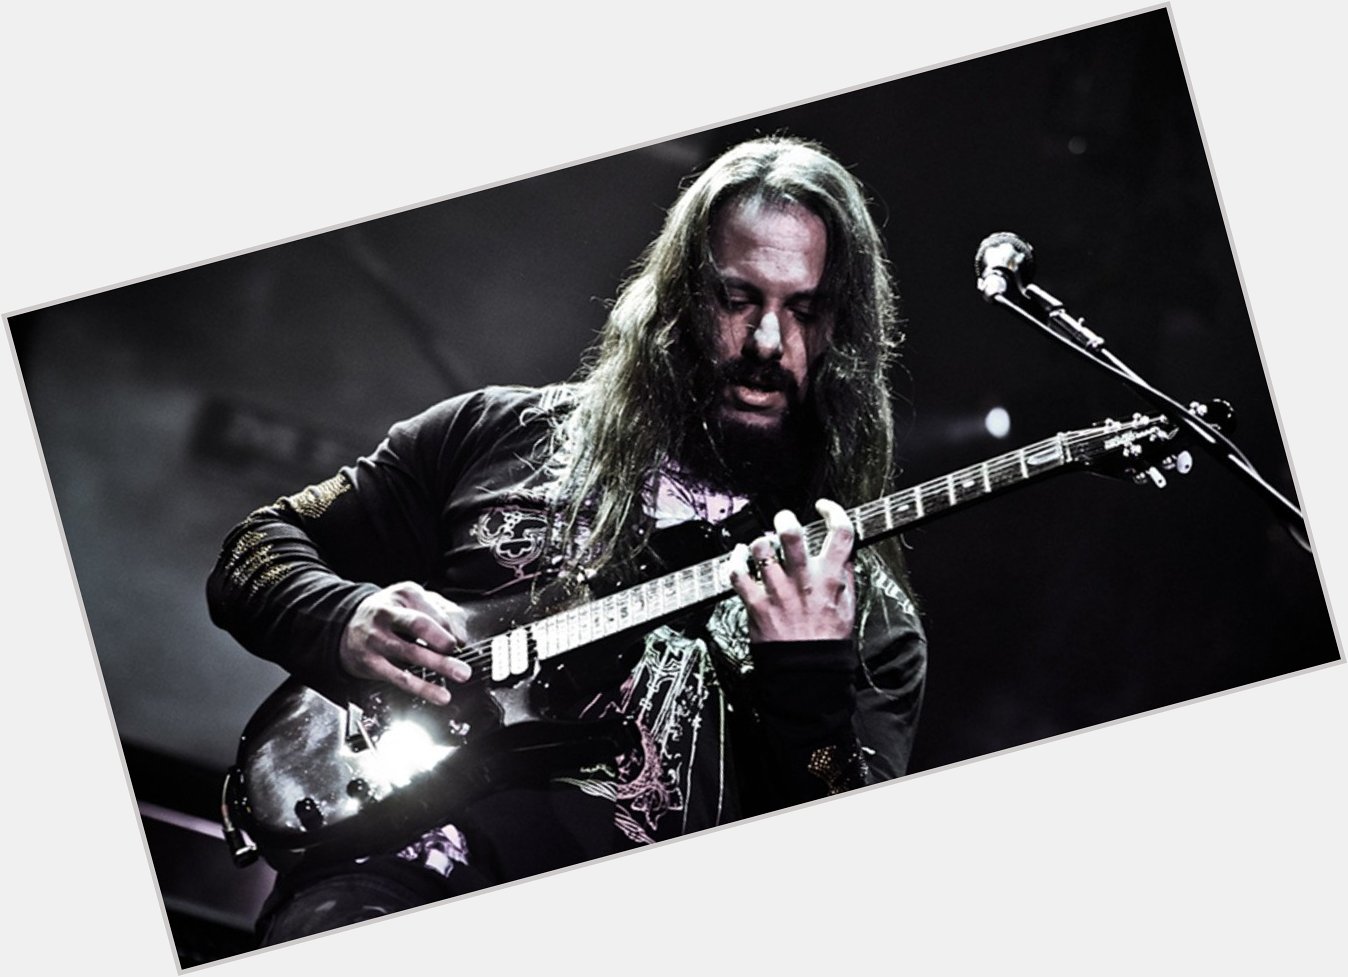 Happy birthday to John Petrucci of Dream Theater. 